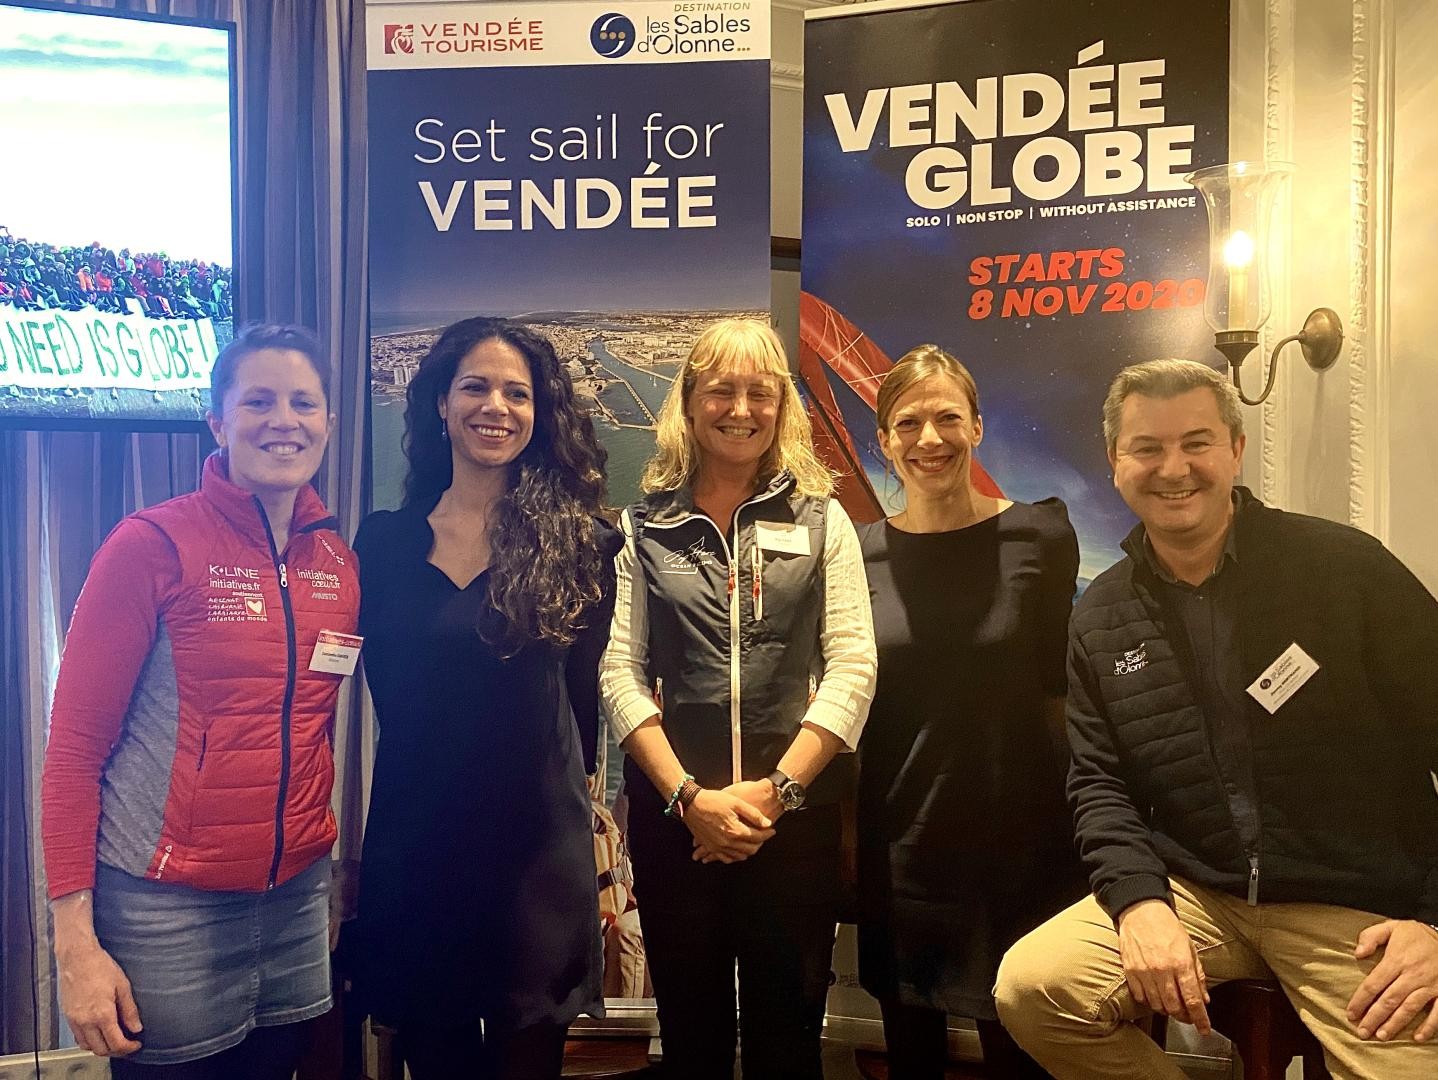 From left to right: Samantha Davies (skipper), Karen Alletru (Vendée Tourism Director), Pip Hare (skipper), Laura Le Goff (Vendée Globe MD), Jimmy Bertrand (Les Sables d'Olonne Tourism Vice Director)